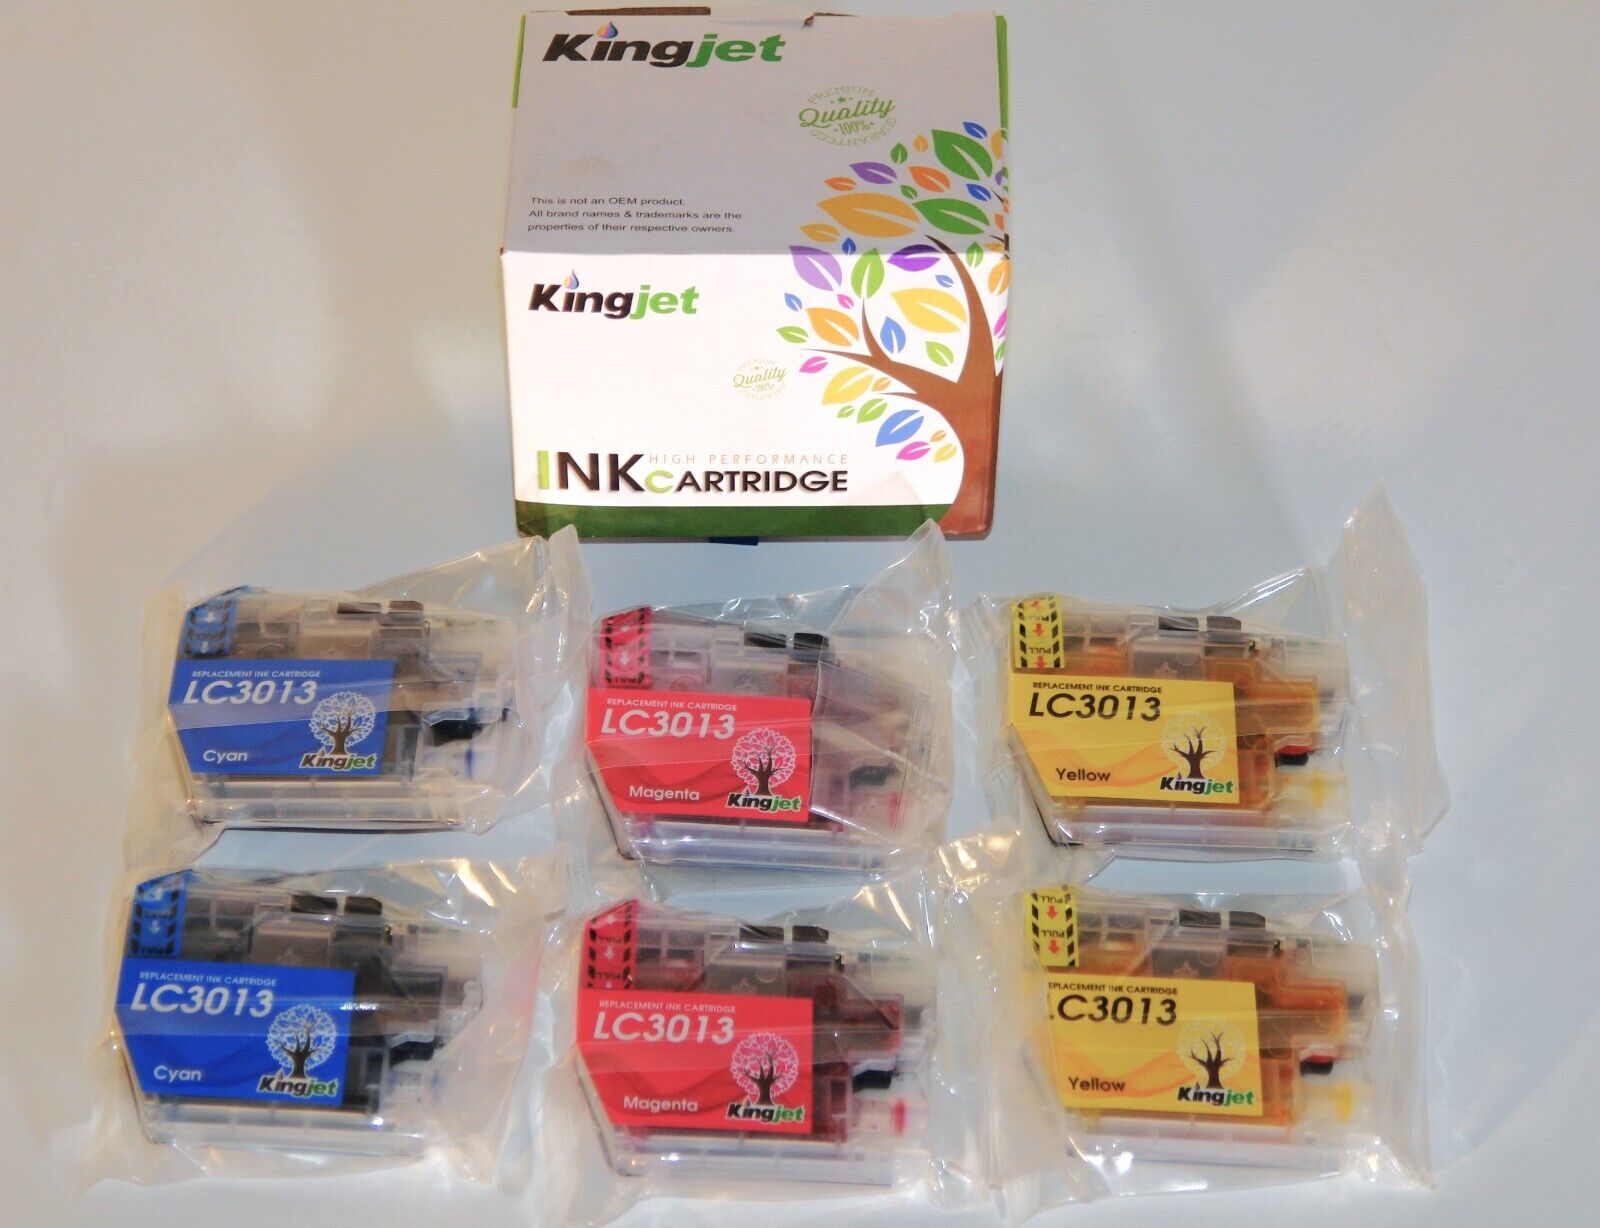 Kingjet Ink Cartridge High Performance -Colors (2) Cyan,(2) Magenta, (2)Yellow